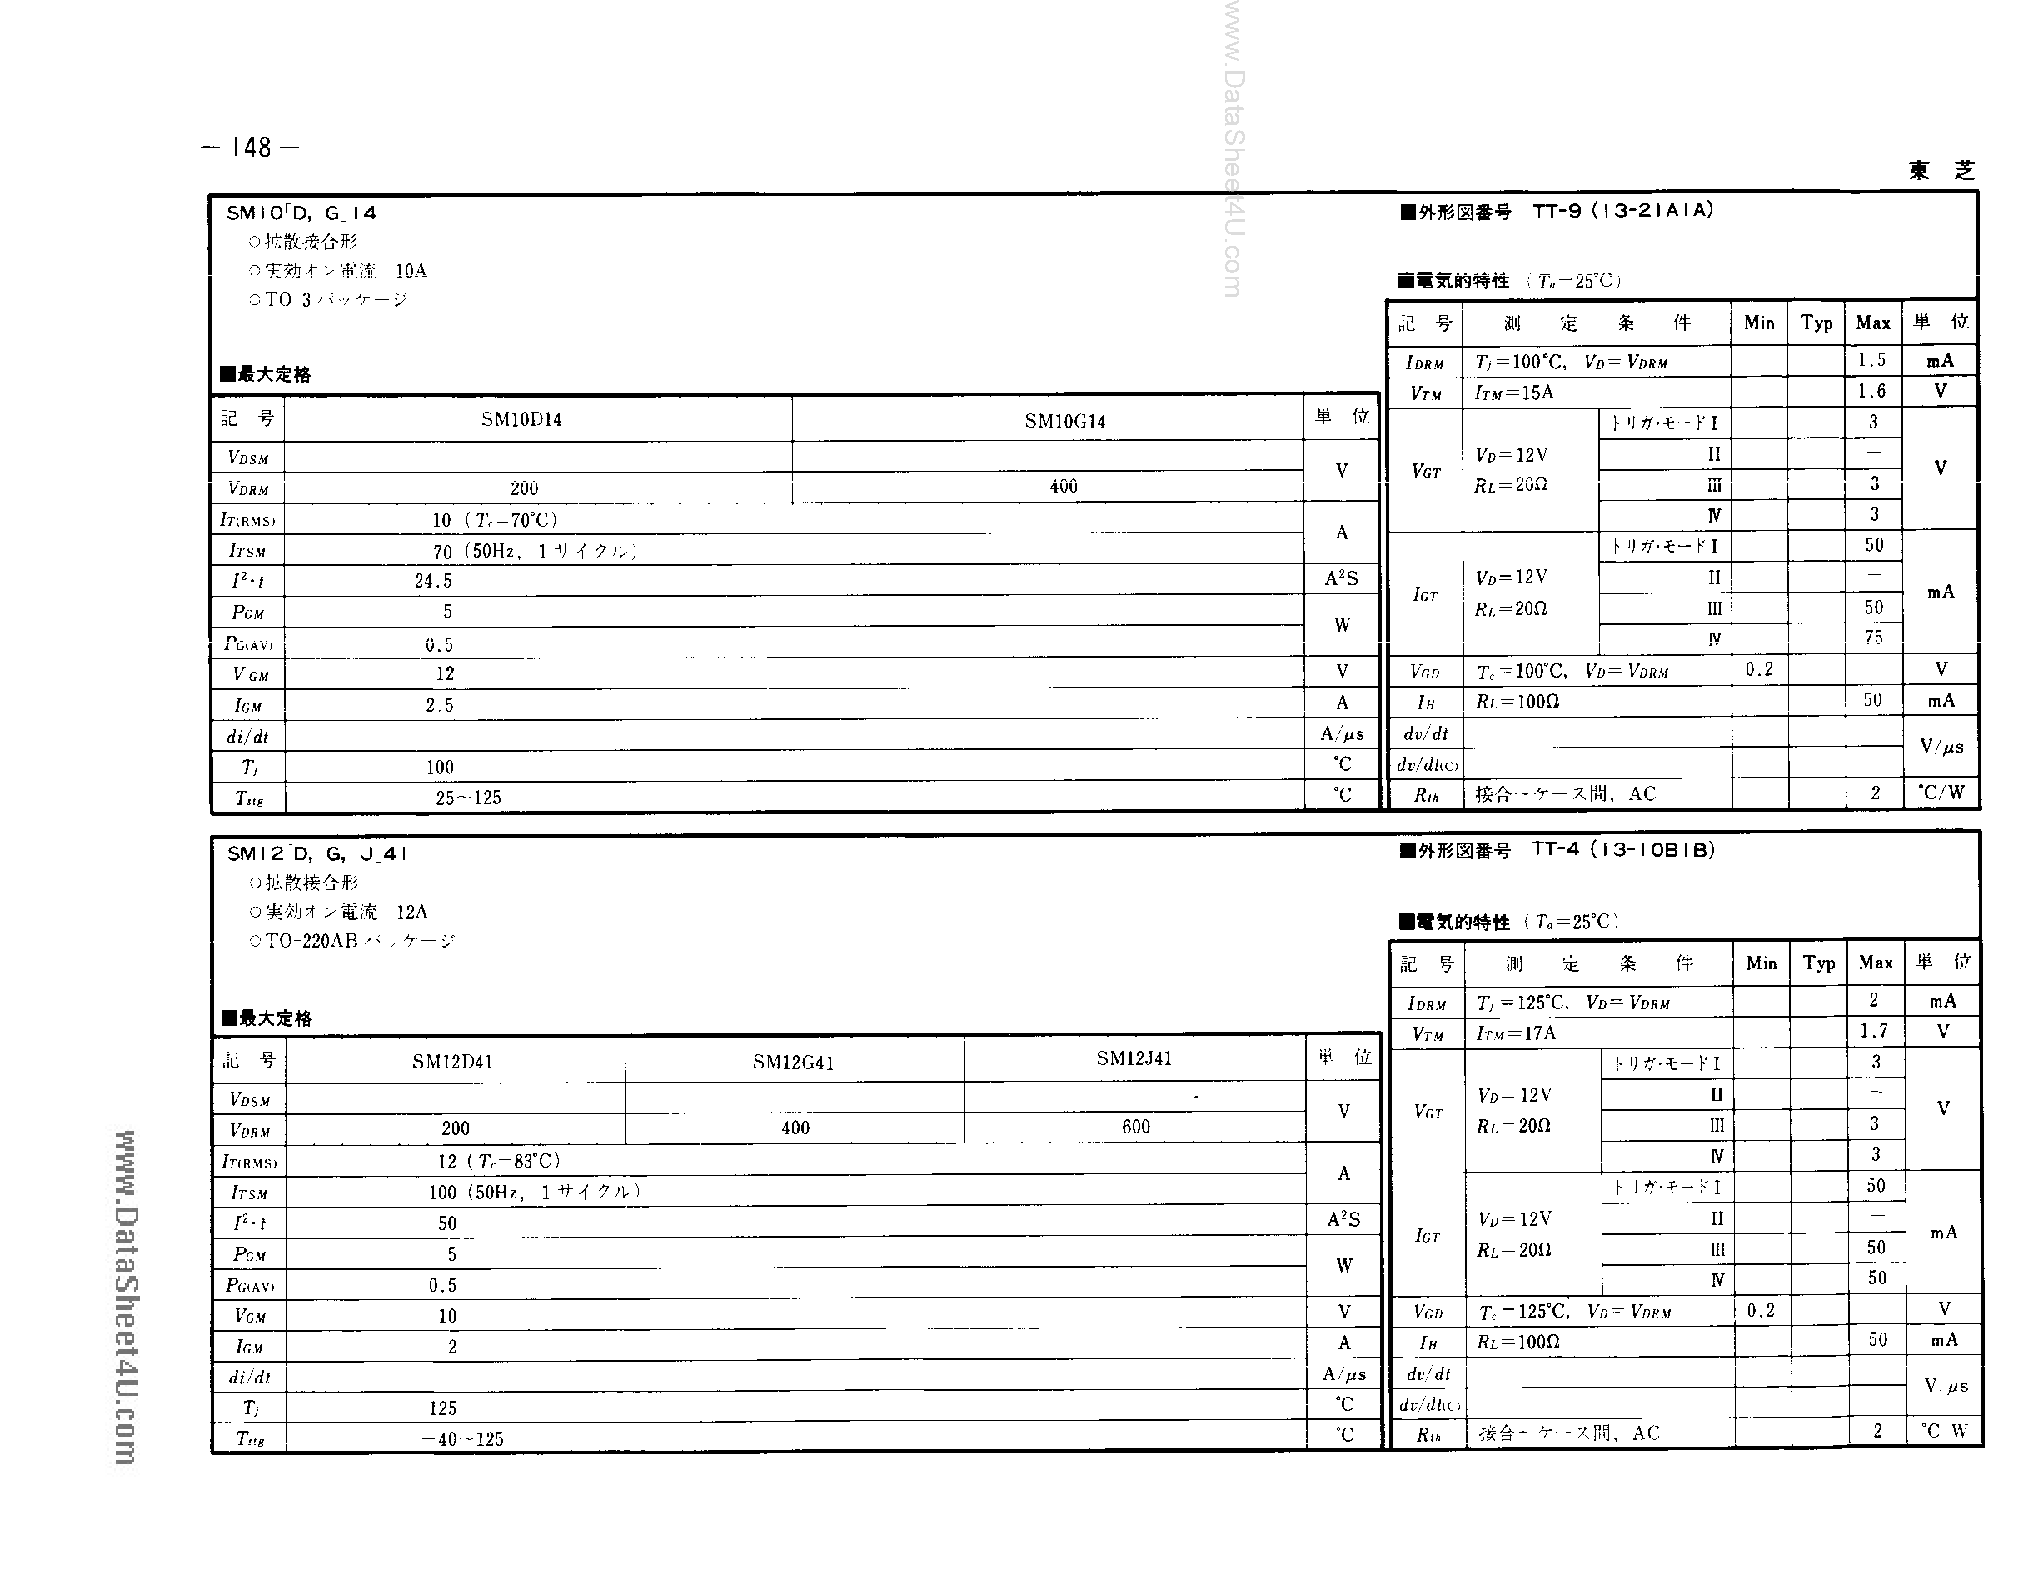 Datasheet SM10D14 - SM10G14 / SM10D14 page 1